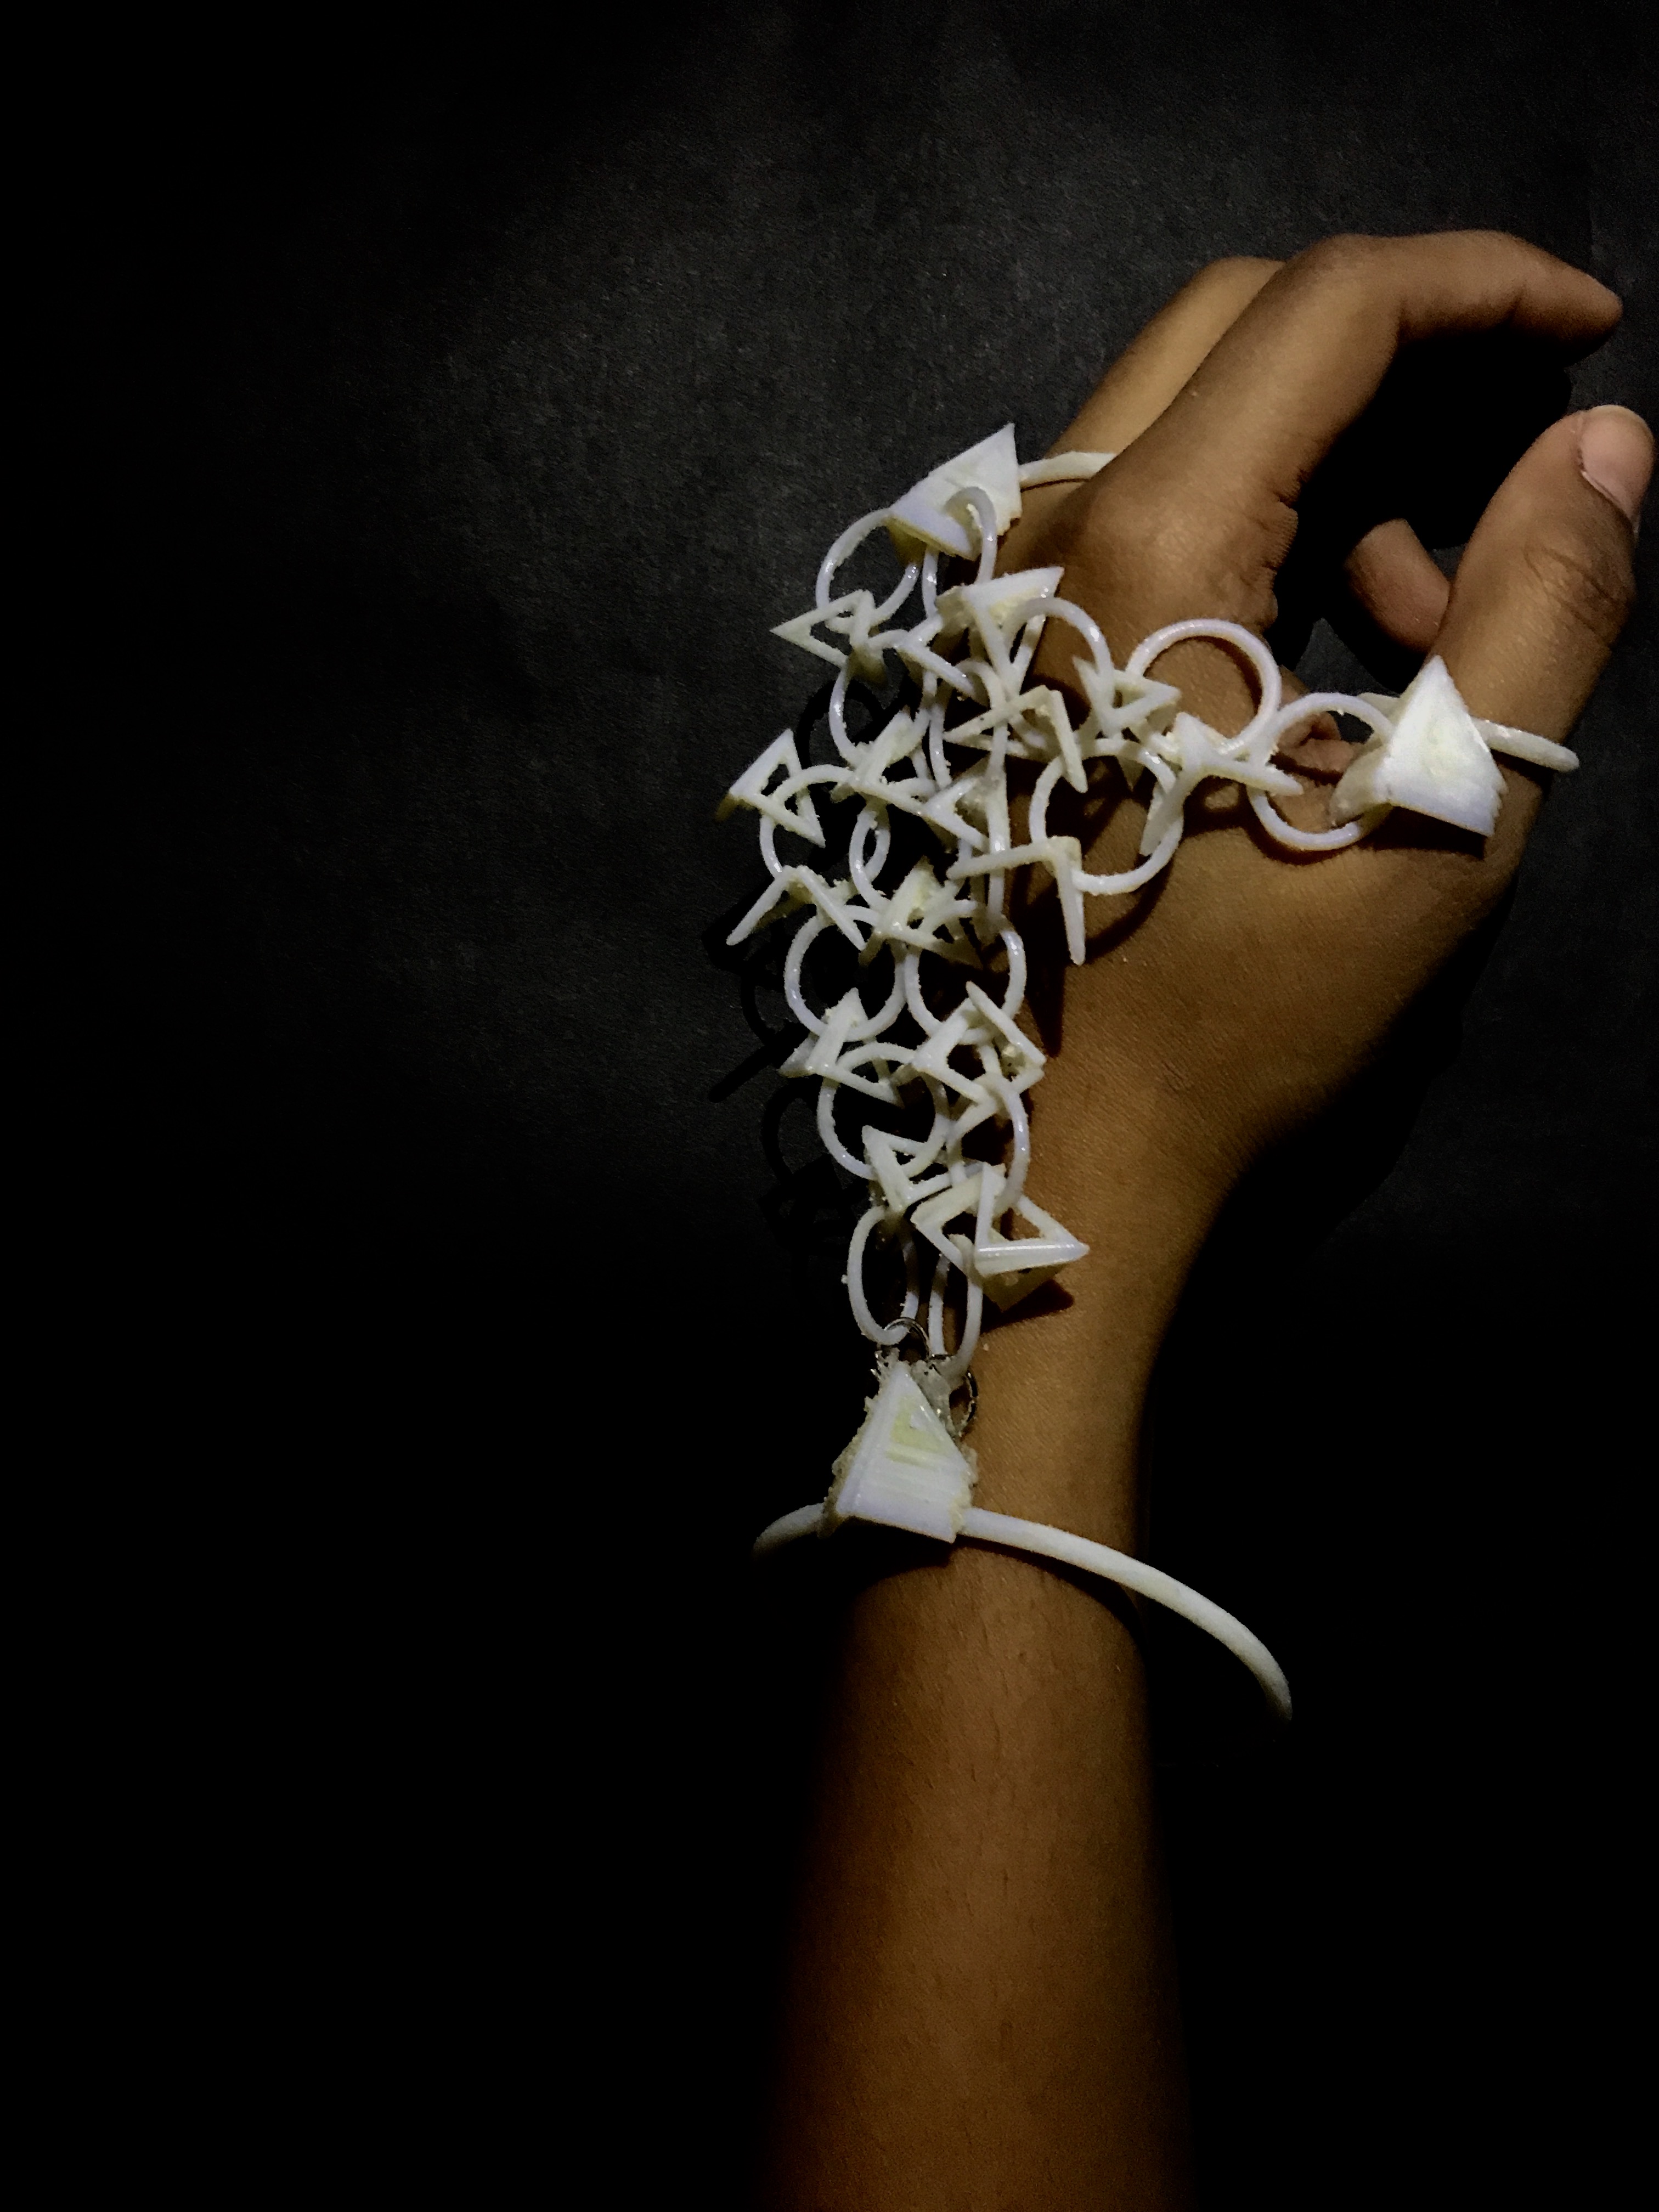 The Armadillo Project- Digital fabrication